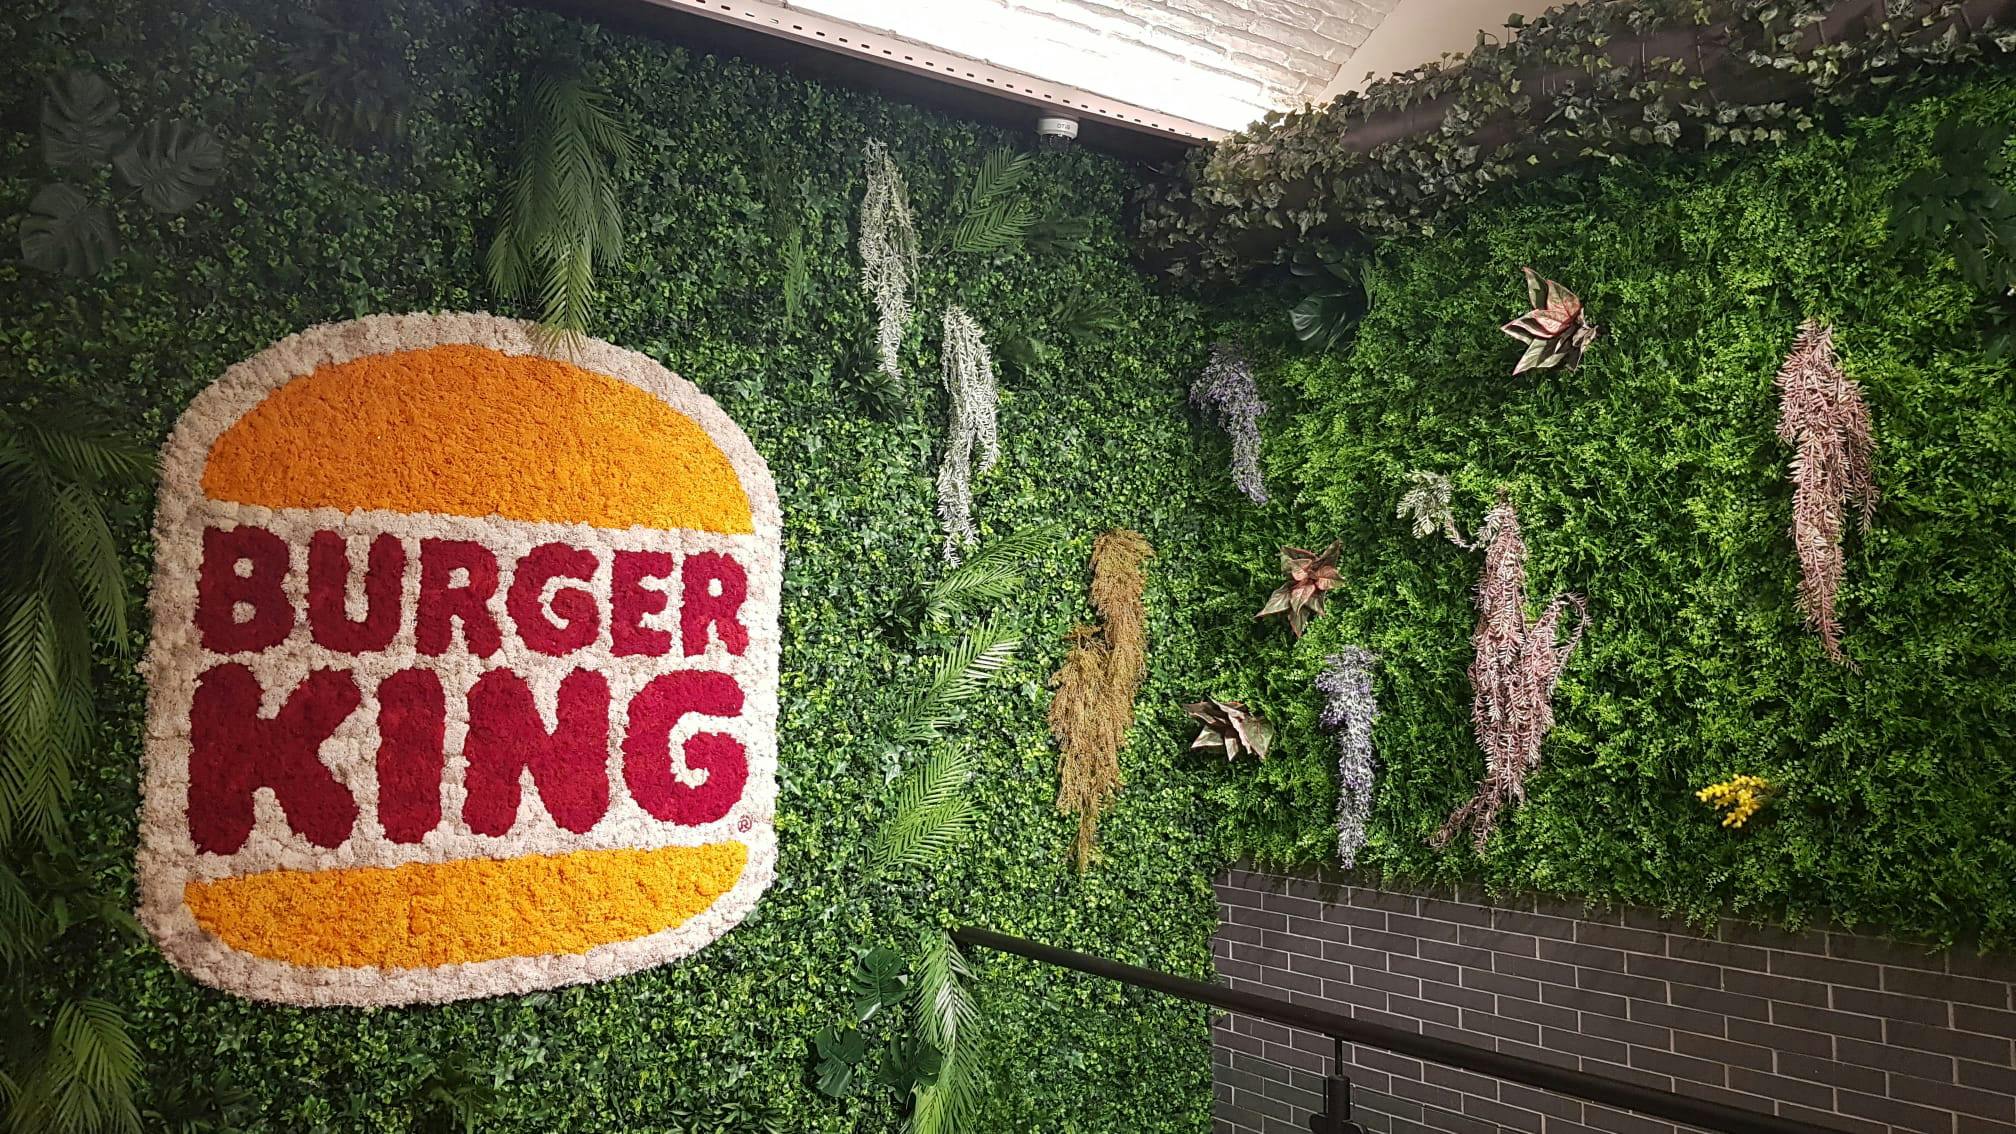 inside the vegan burger king